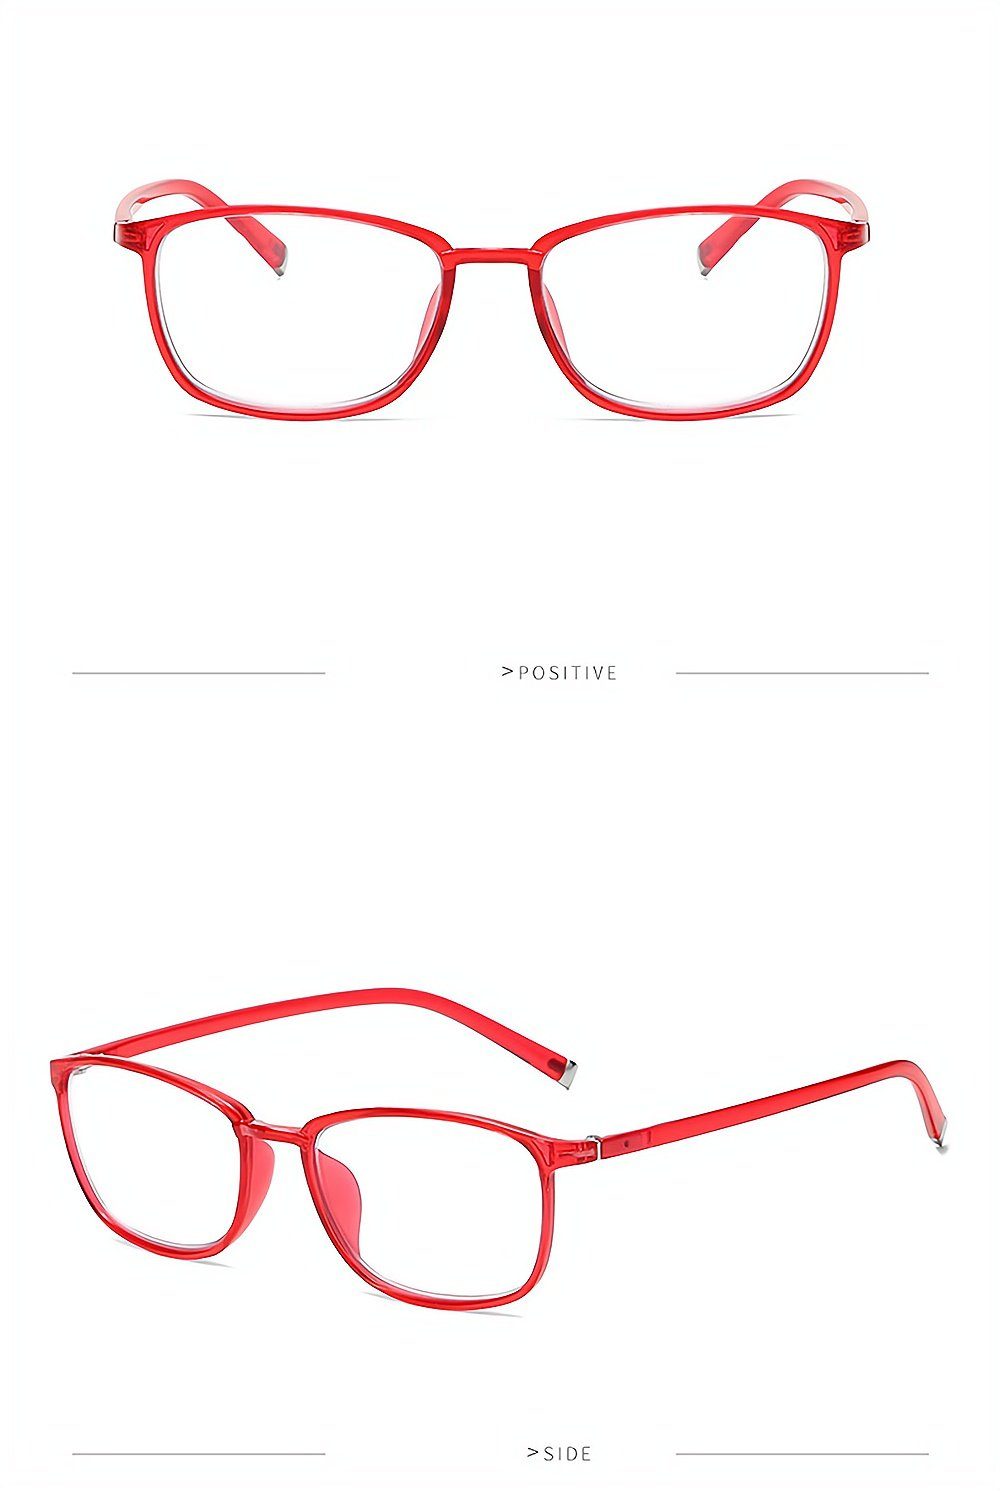 Gläser bedruckte anti Mode PACIEA Lesebrille Rahmen rot presbyopische blaue